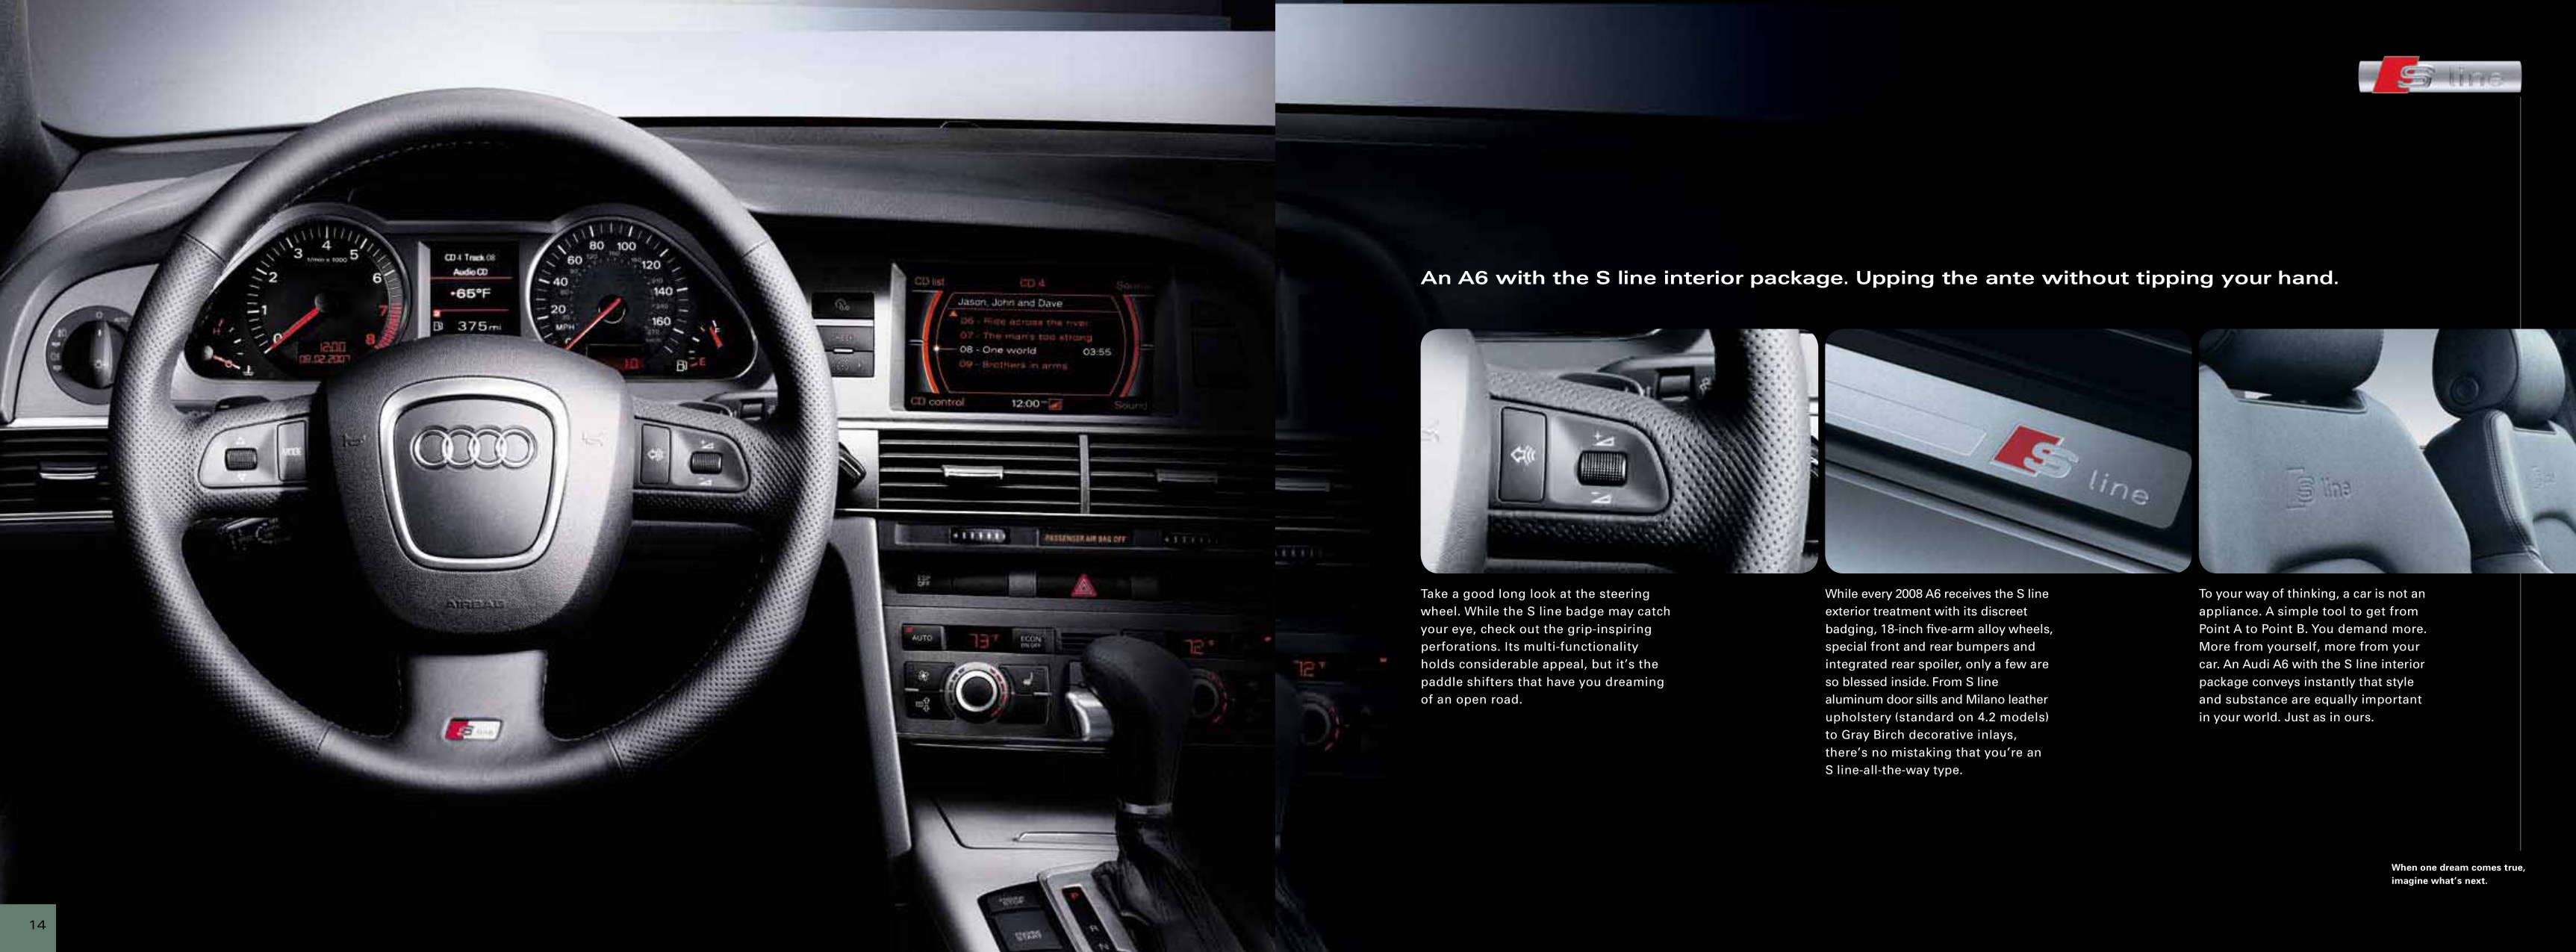 2008 Audi A6 Brochure Page 6